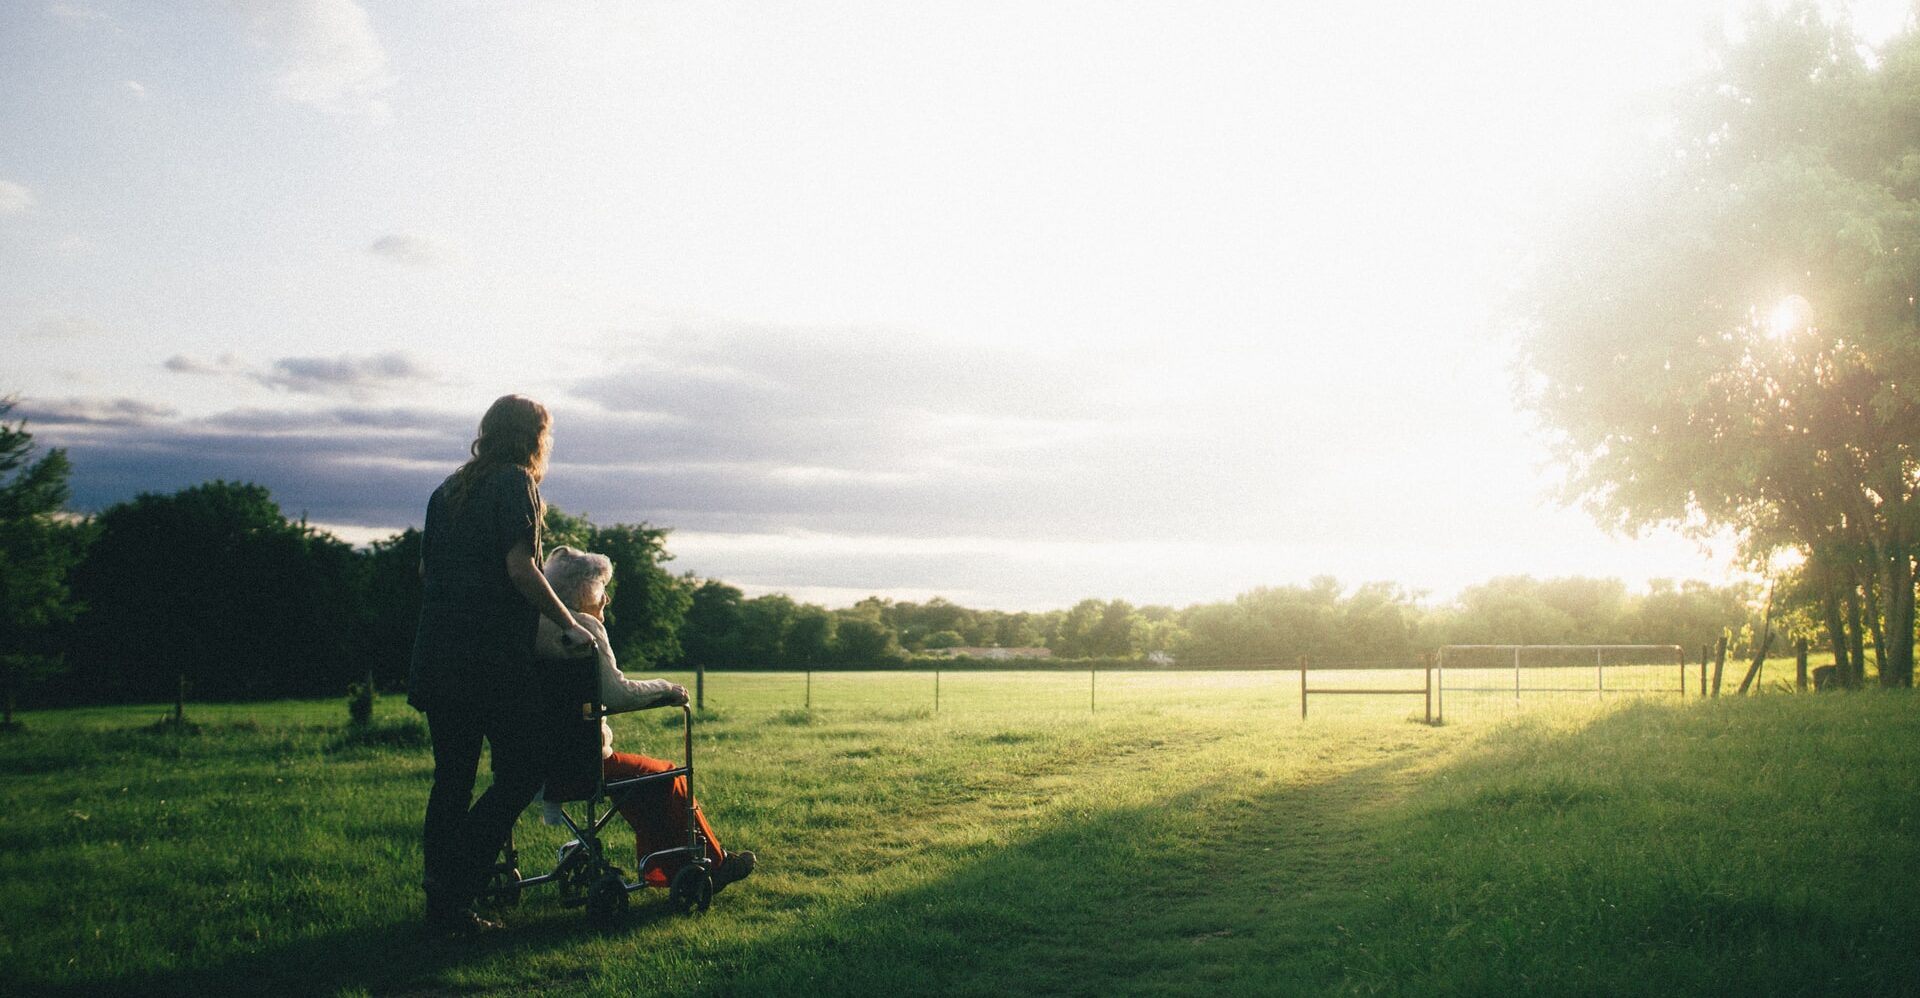 A caretaker pushes an elderly woman in a wheelchair across a sunny field